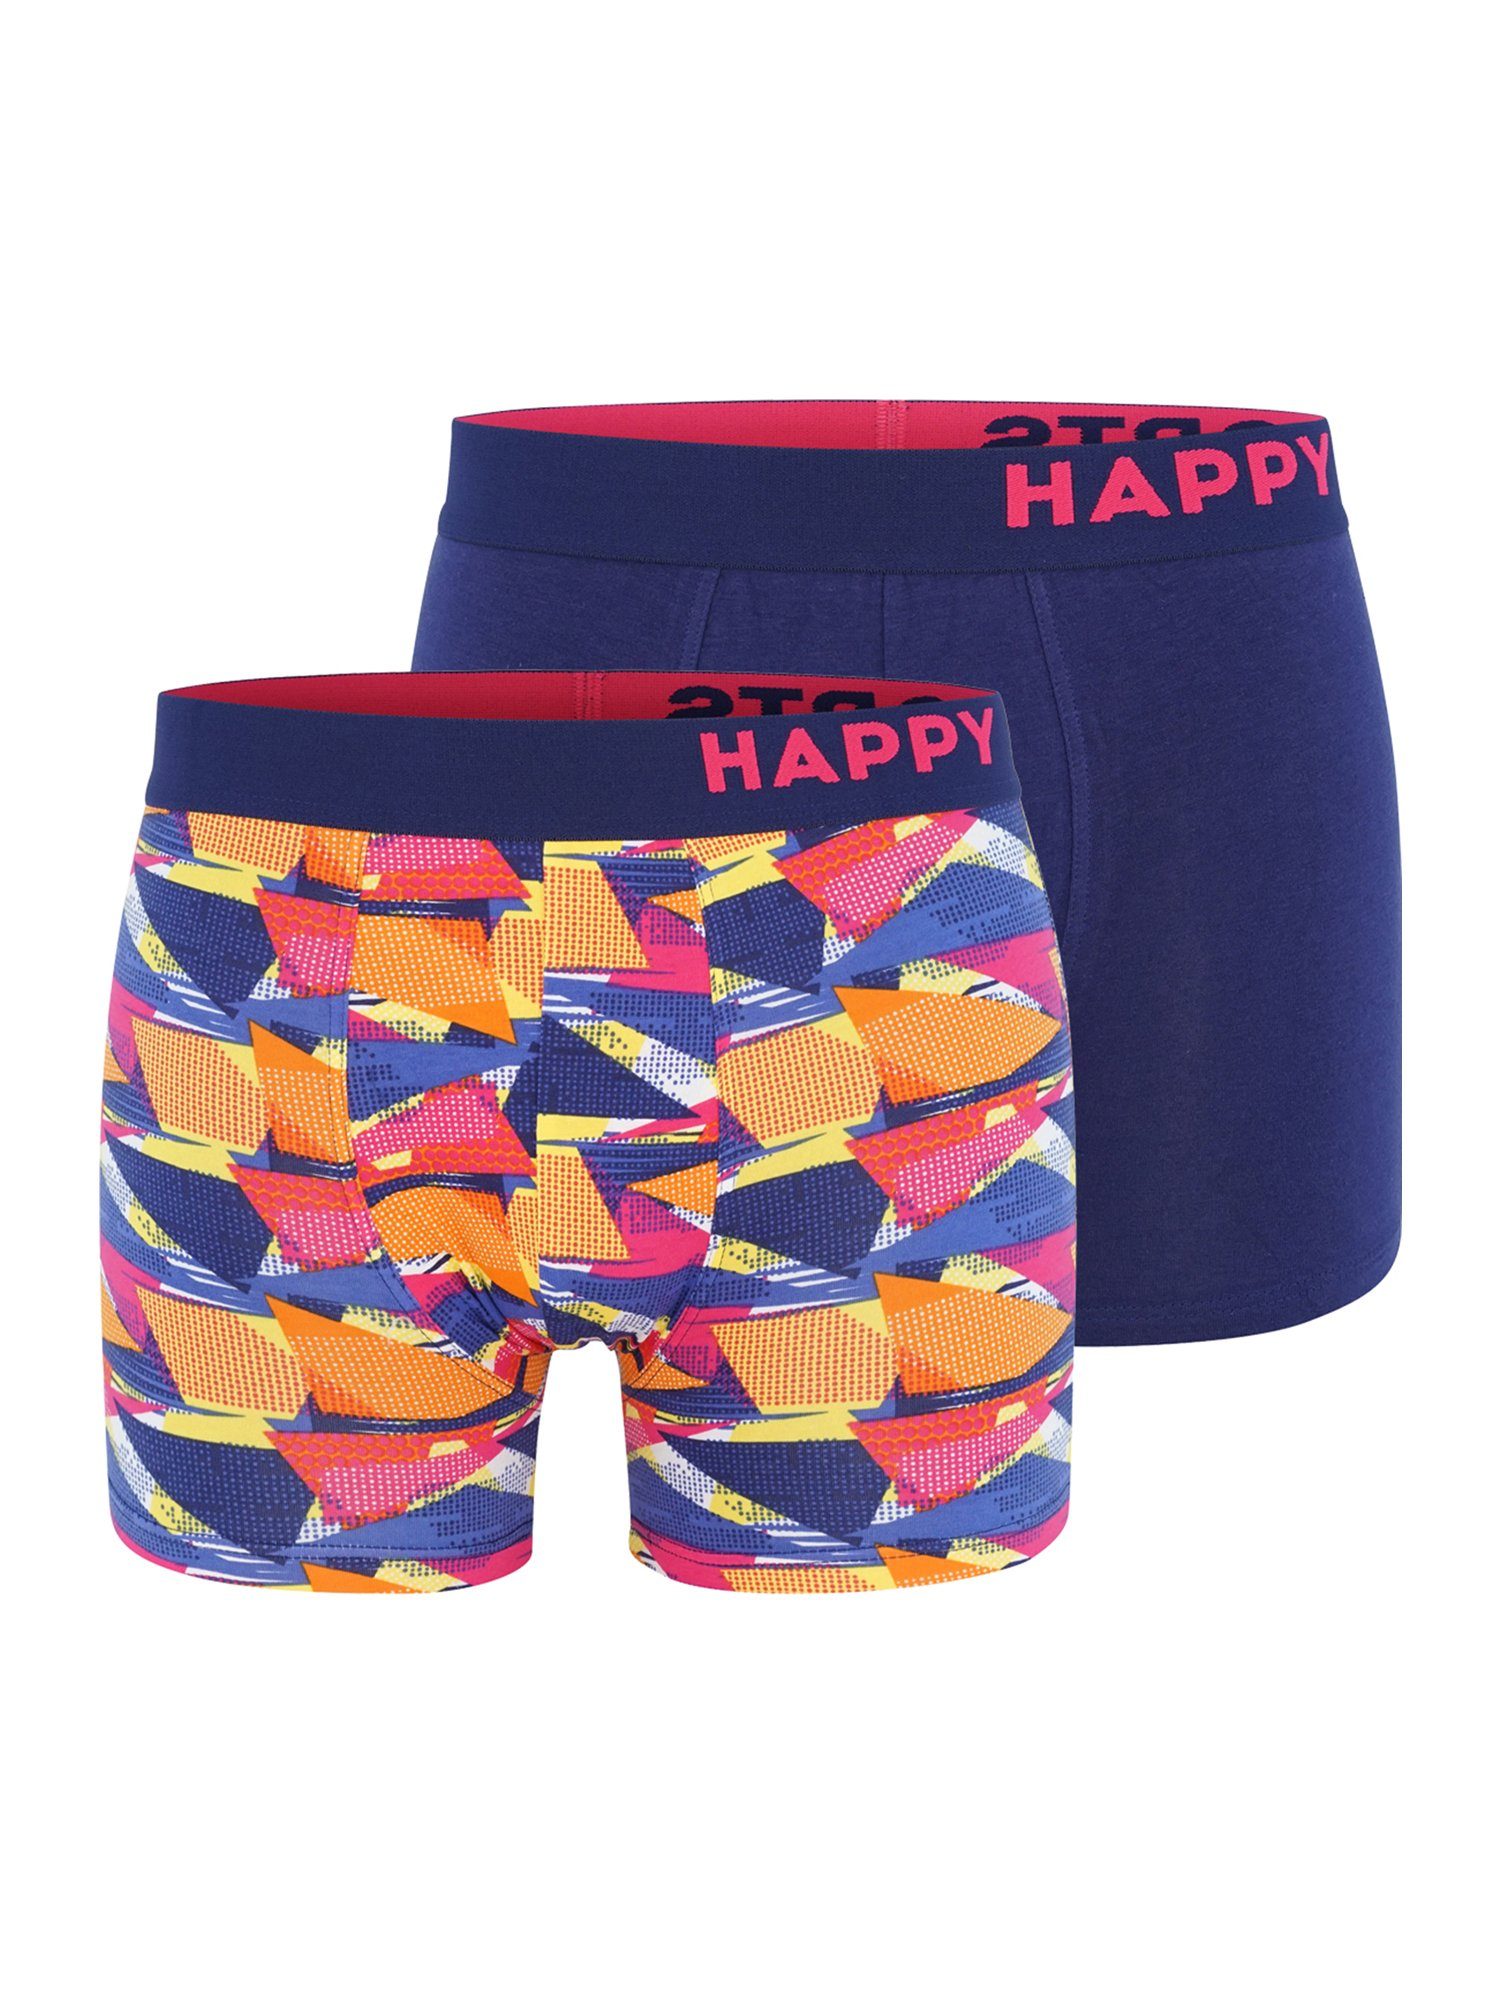 Trunks Neon SHORTS Motivprint Pants Retro HAPPY